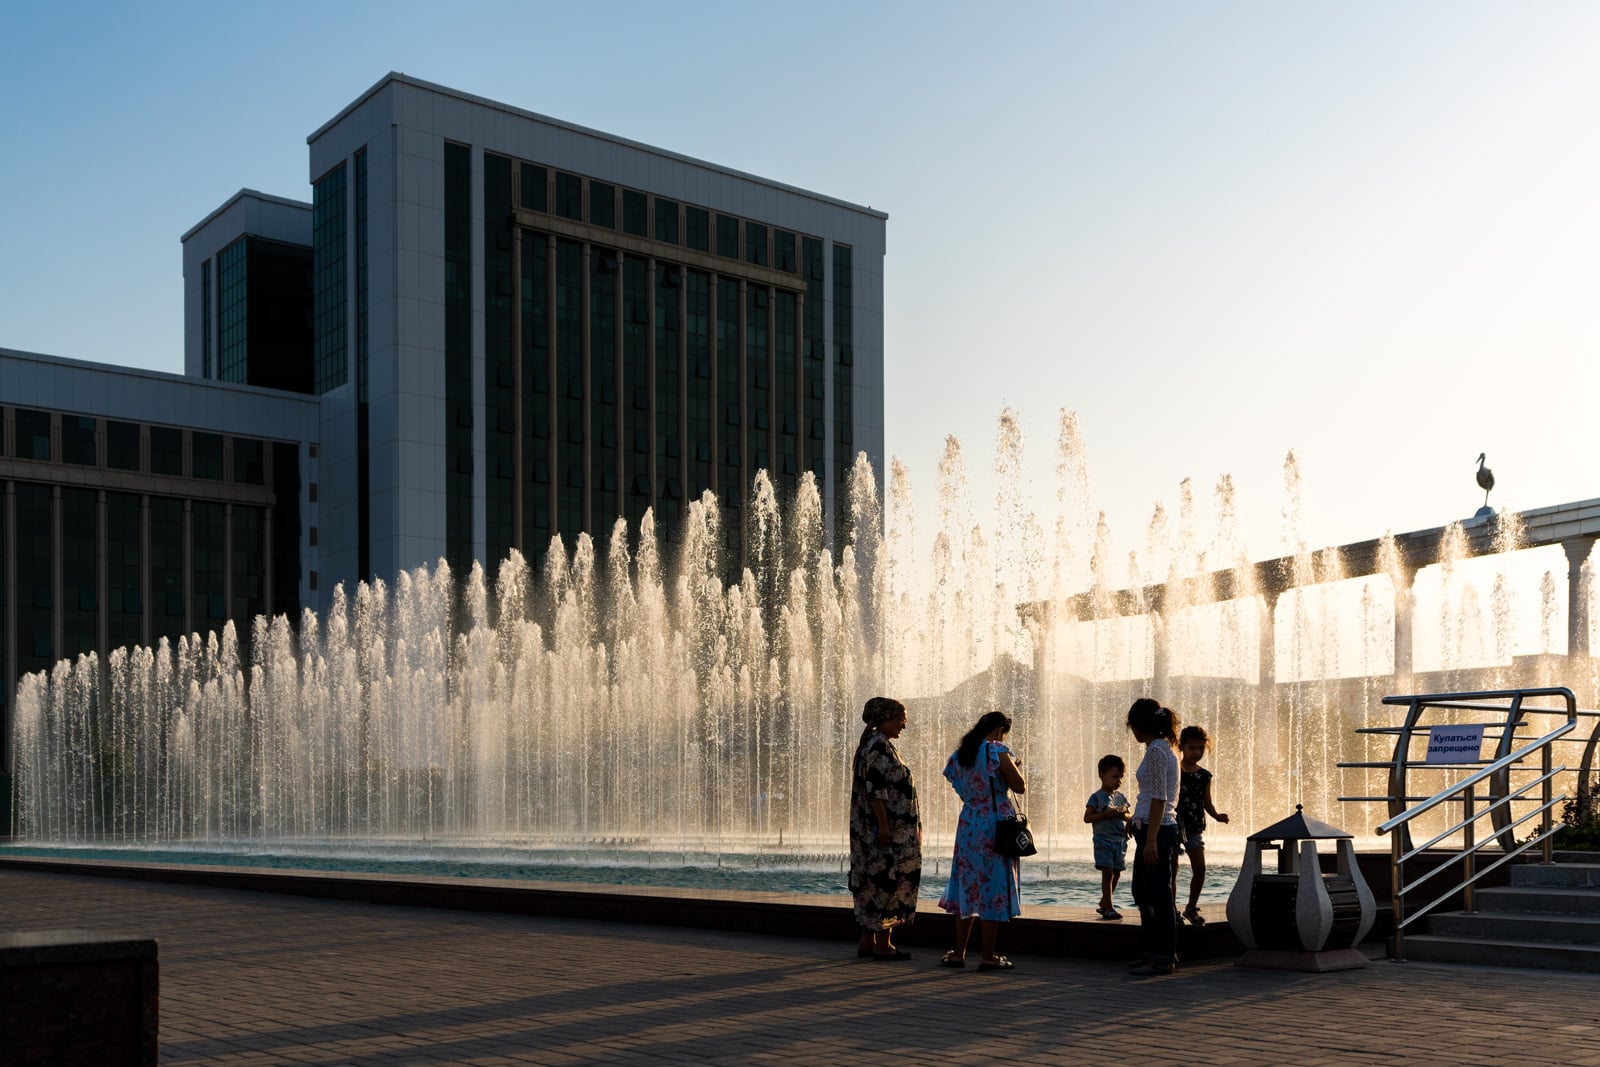 Families in Independence Square, Tashkent, Uzbekistan